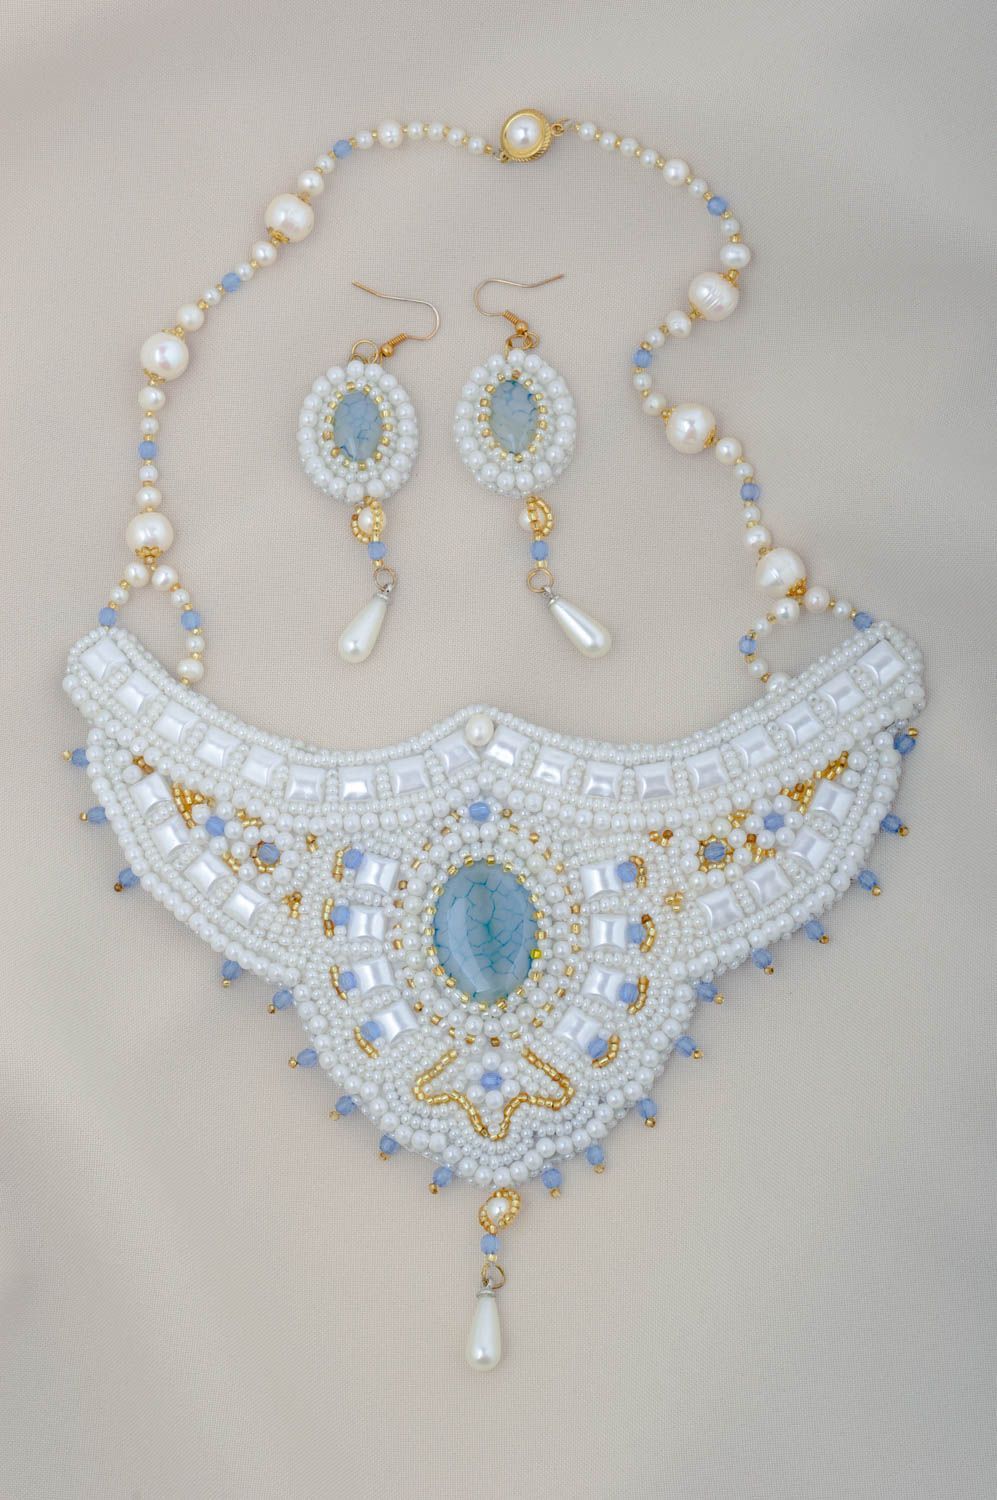 Handmade earrings designer pendant beaded accessory beads jewelry gift ideas photo 1